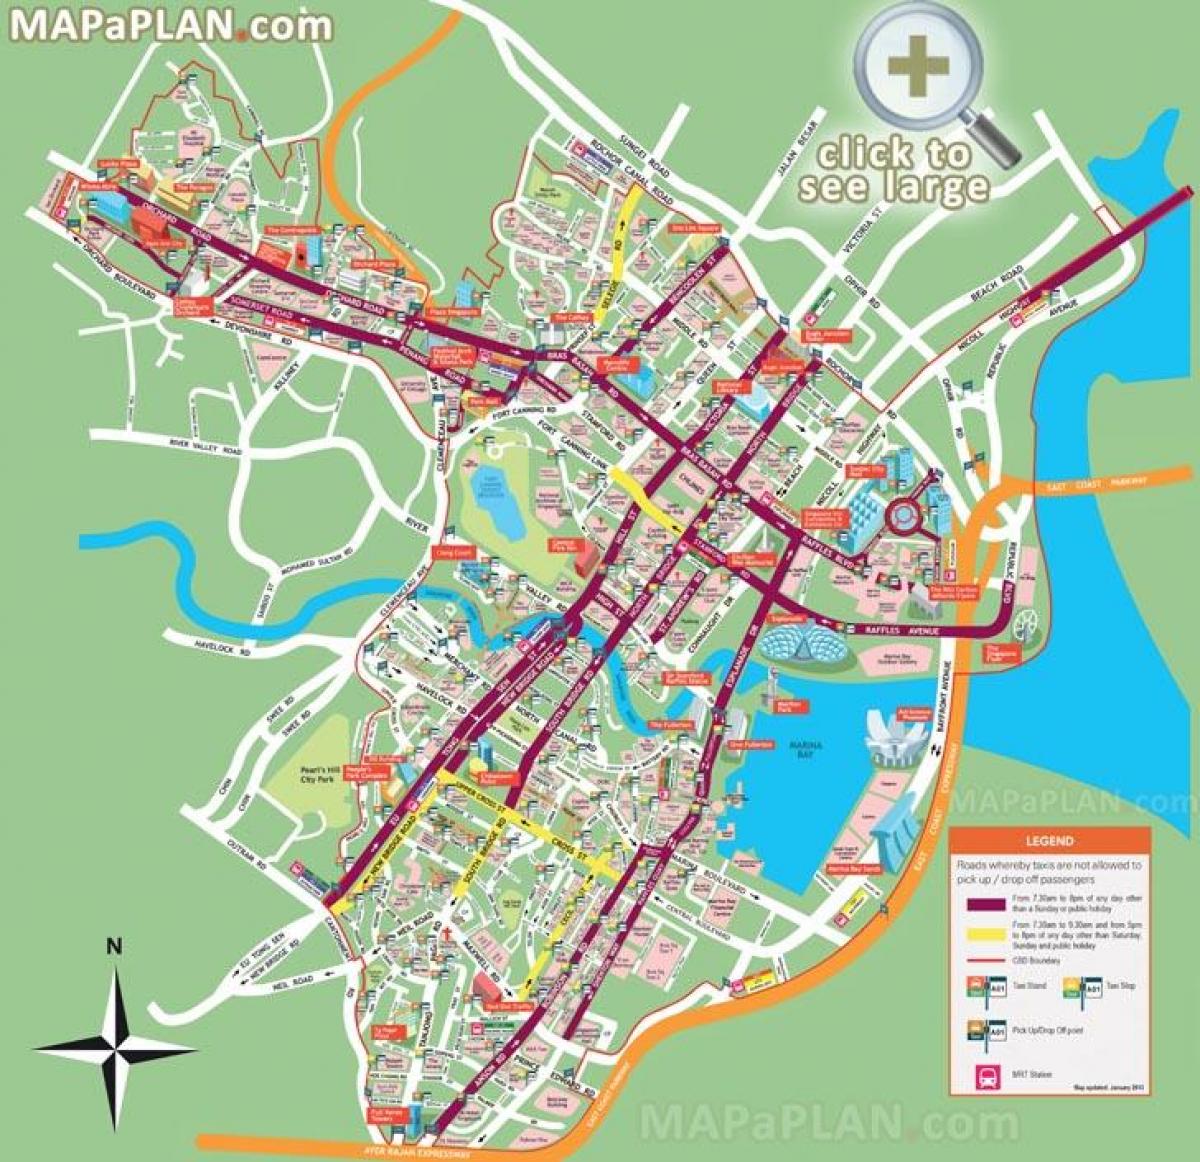 zemljevid Singapur mesto